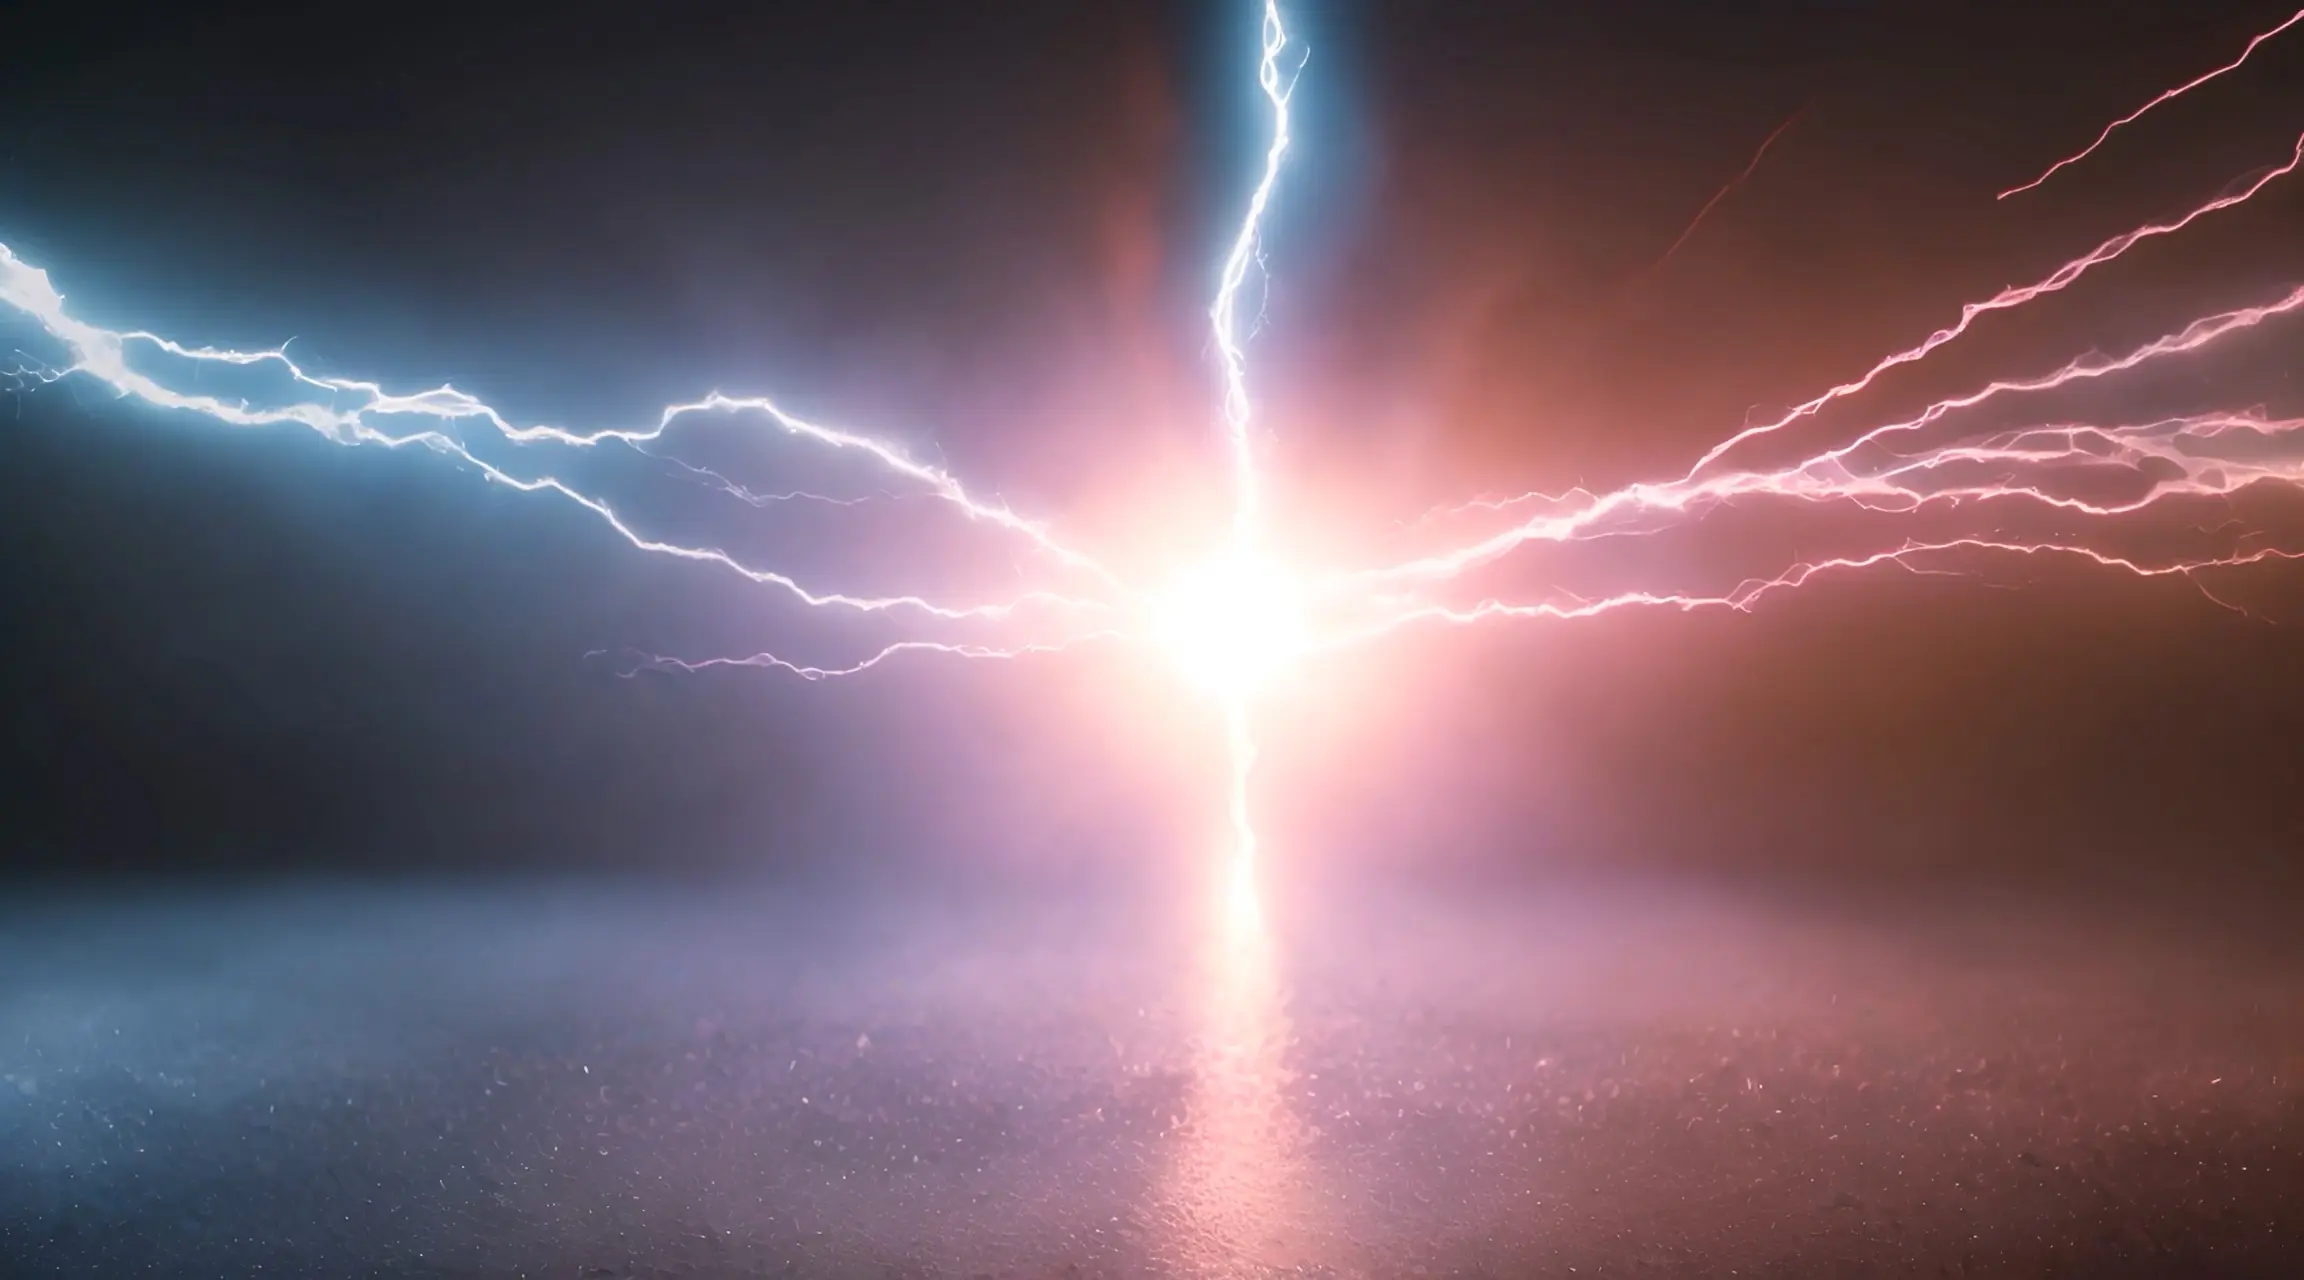 Vivid Electric Storm Illumination Video